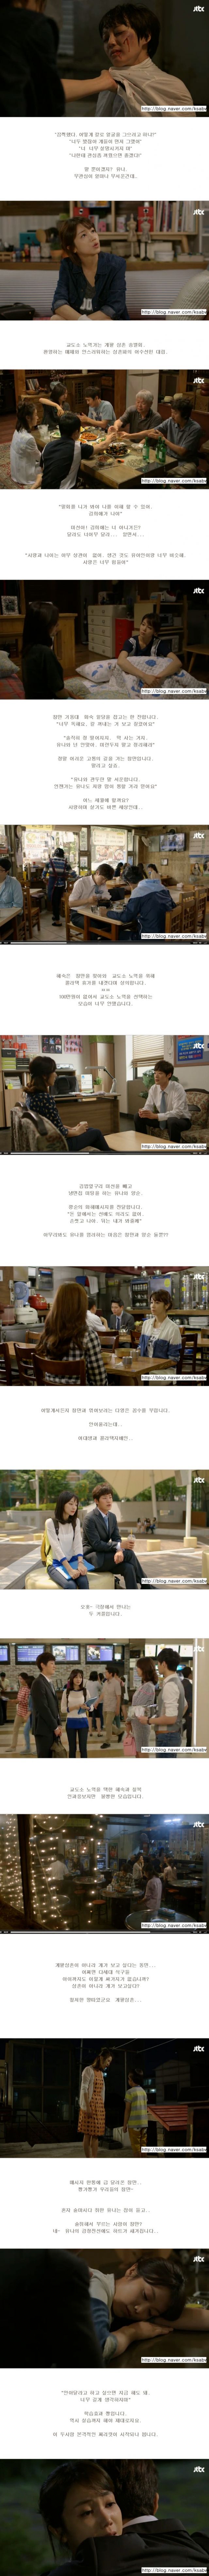 episode 12 captures for the Korean drama 'Yuna's Street'